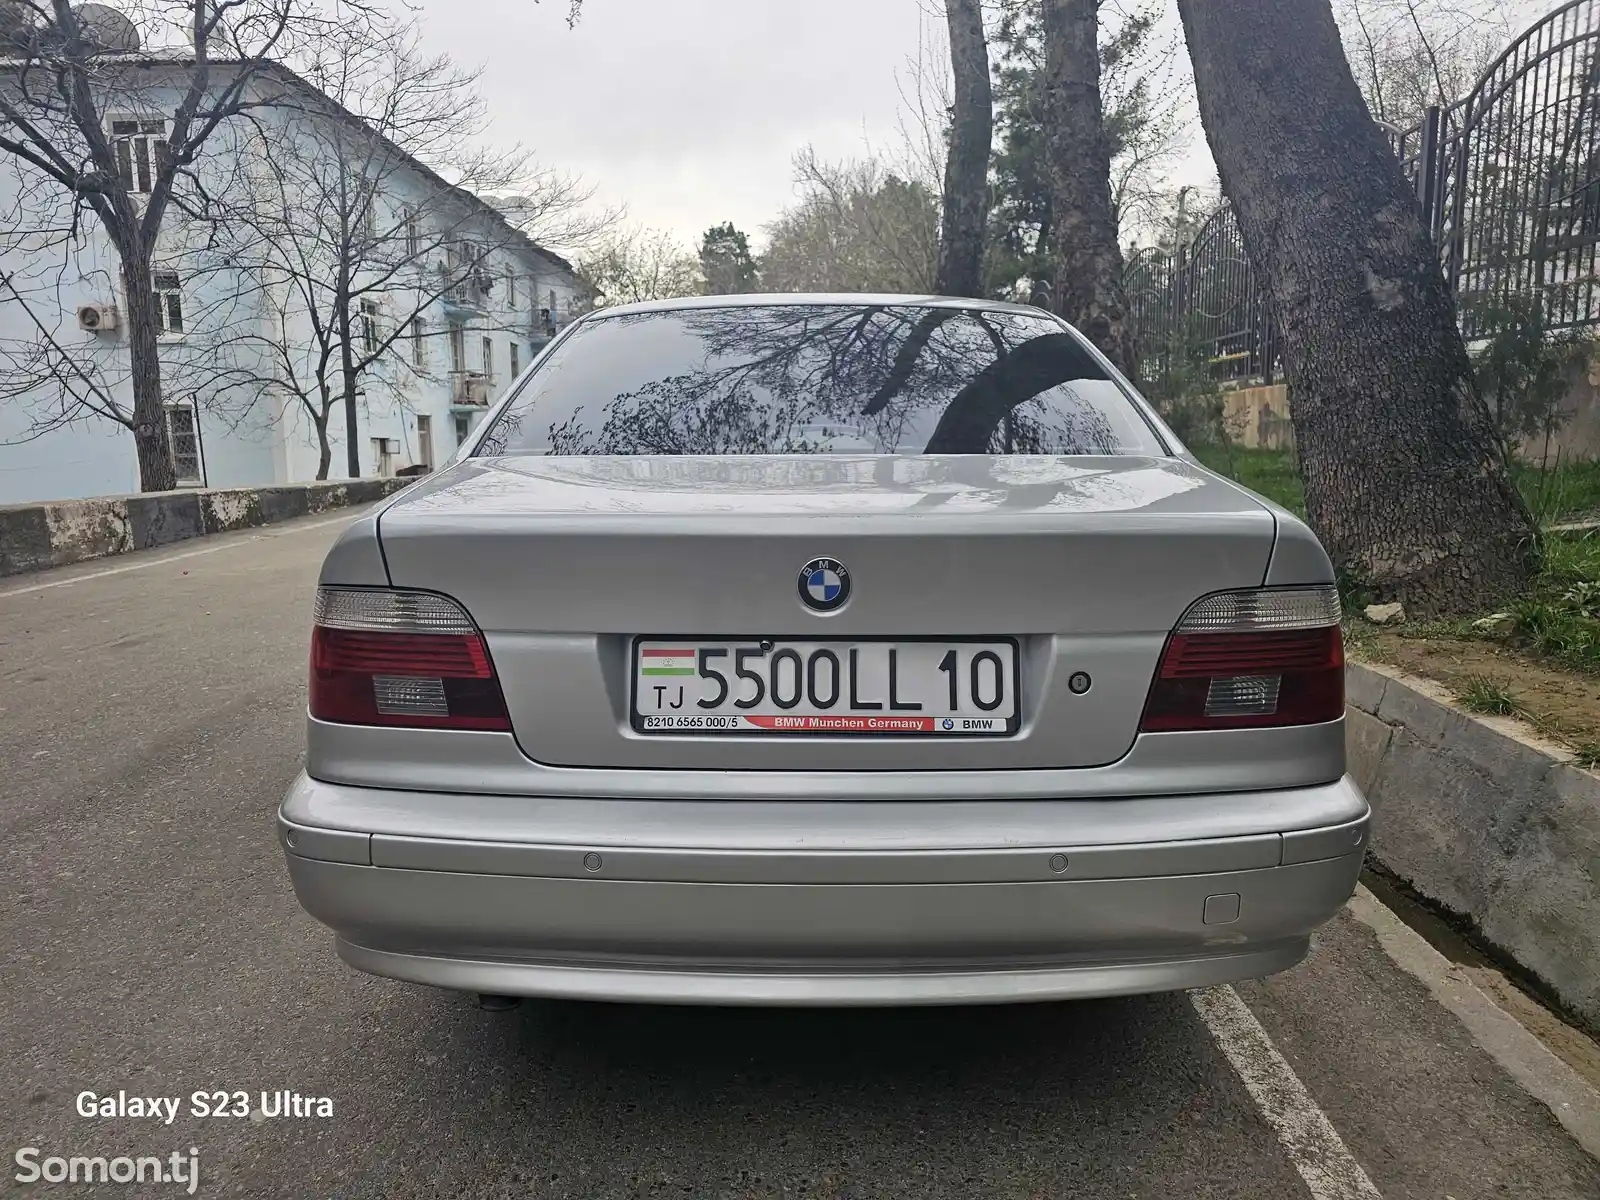 BMW 5 series, 2003-2